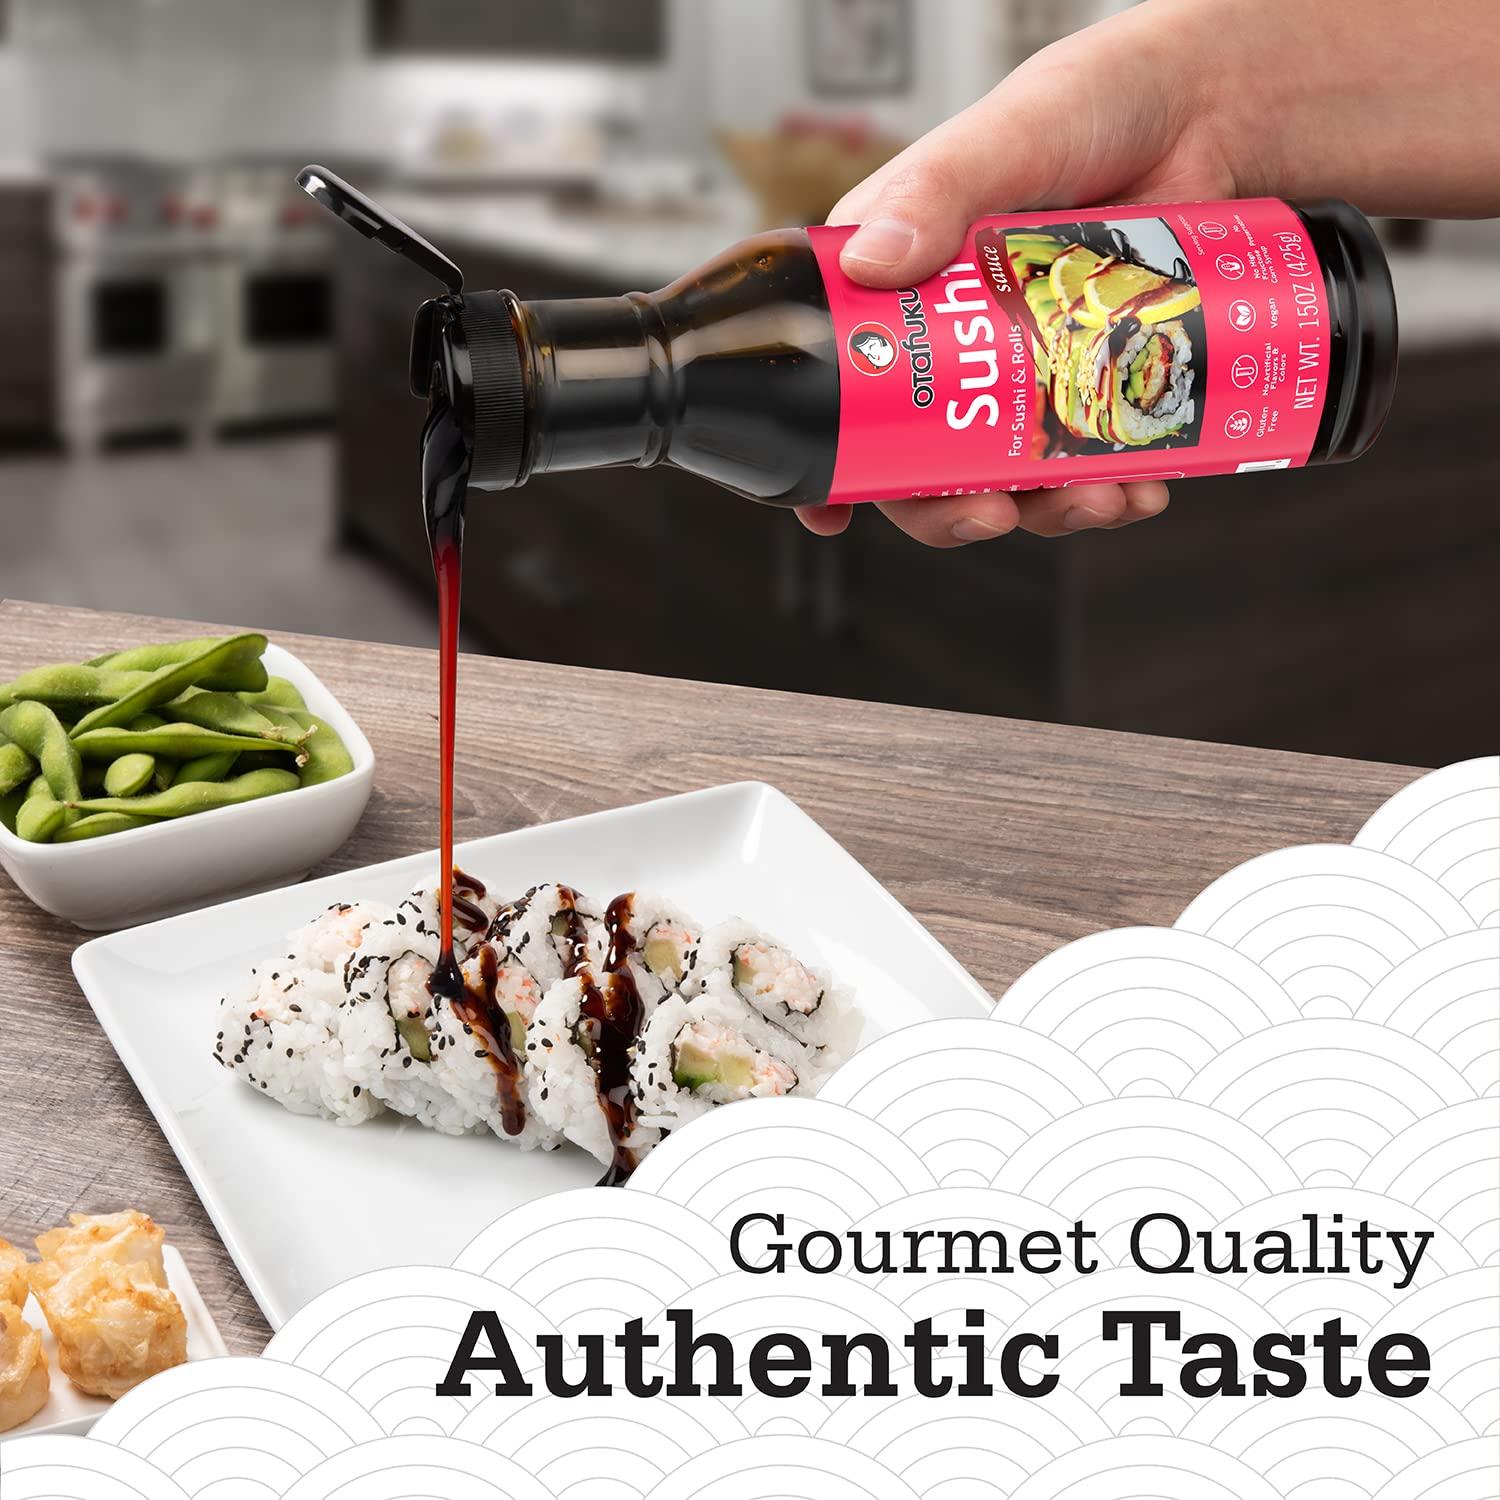  Otafuku Okonomiyaki Flour for Japanese Okonomiyaki Pancakes,  12 Servings, 15.9 Oz (1 Lb) : Grocery & Gourmet Food